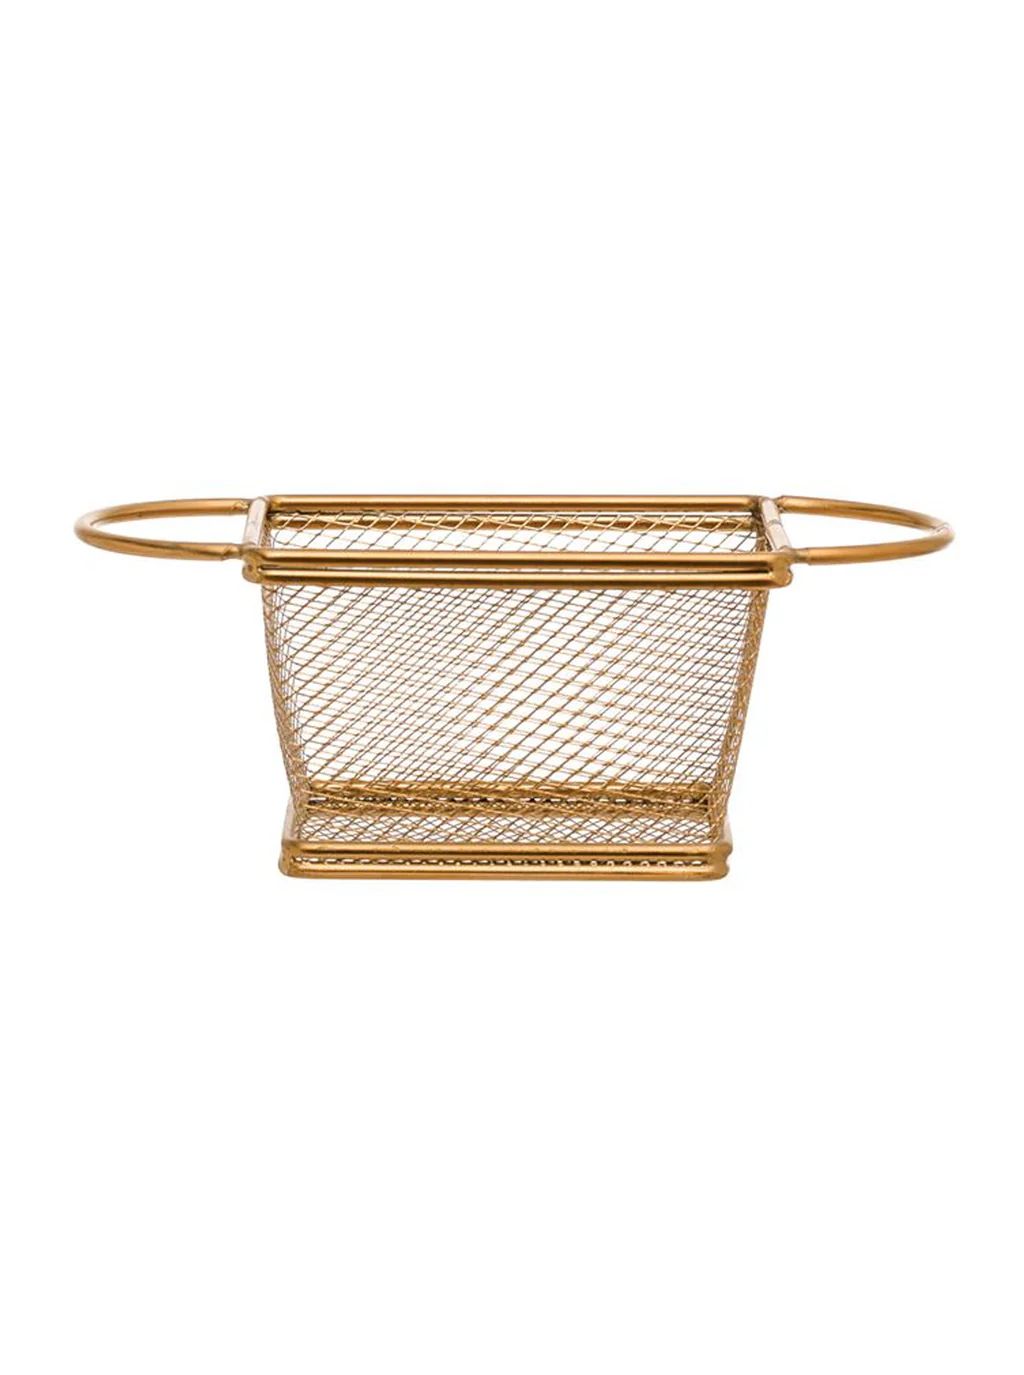 Gold Mesh Basket | House of Jade Home